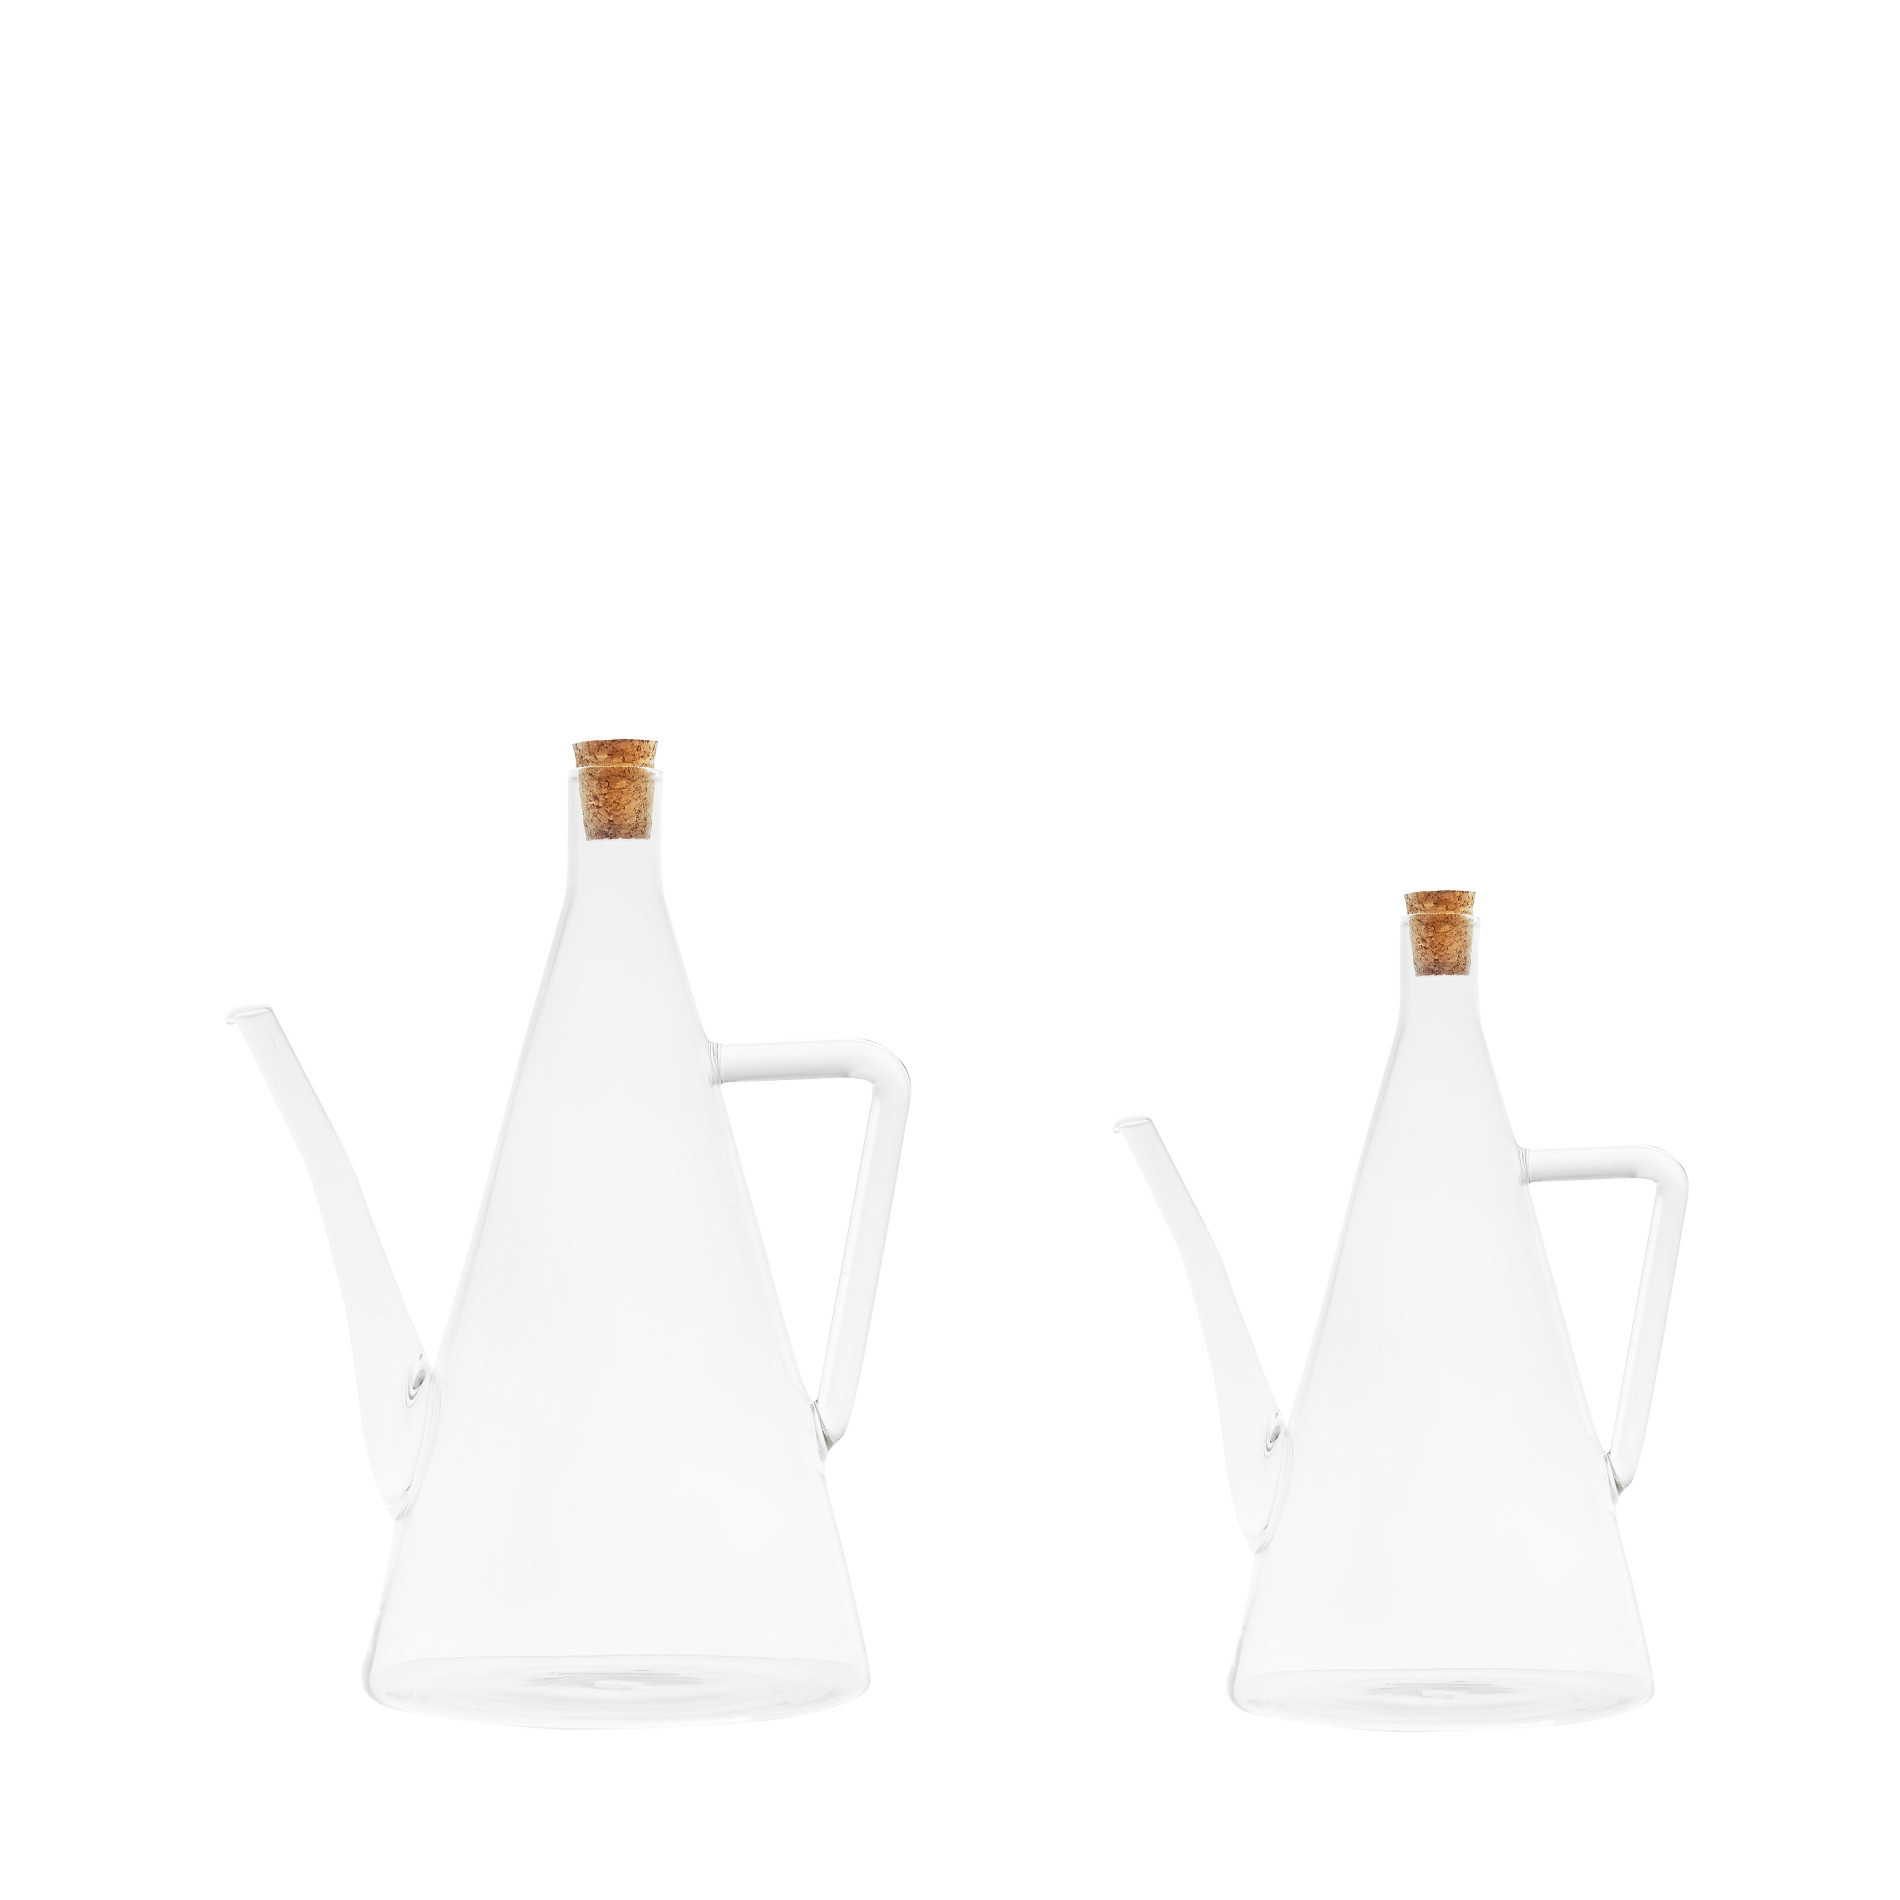 Glass oil bottle with cork stopper., Transparent, large image number 1